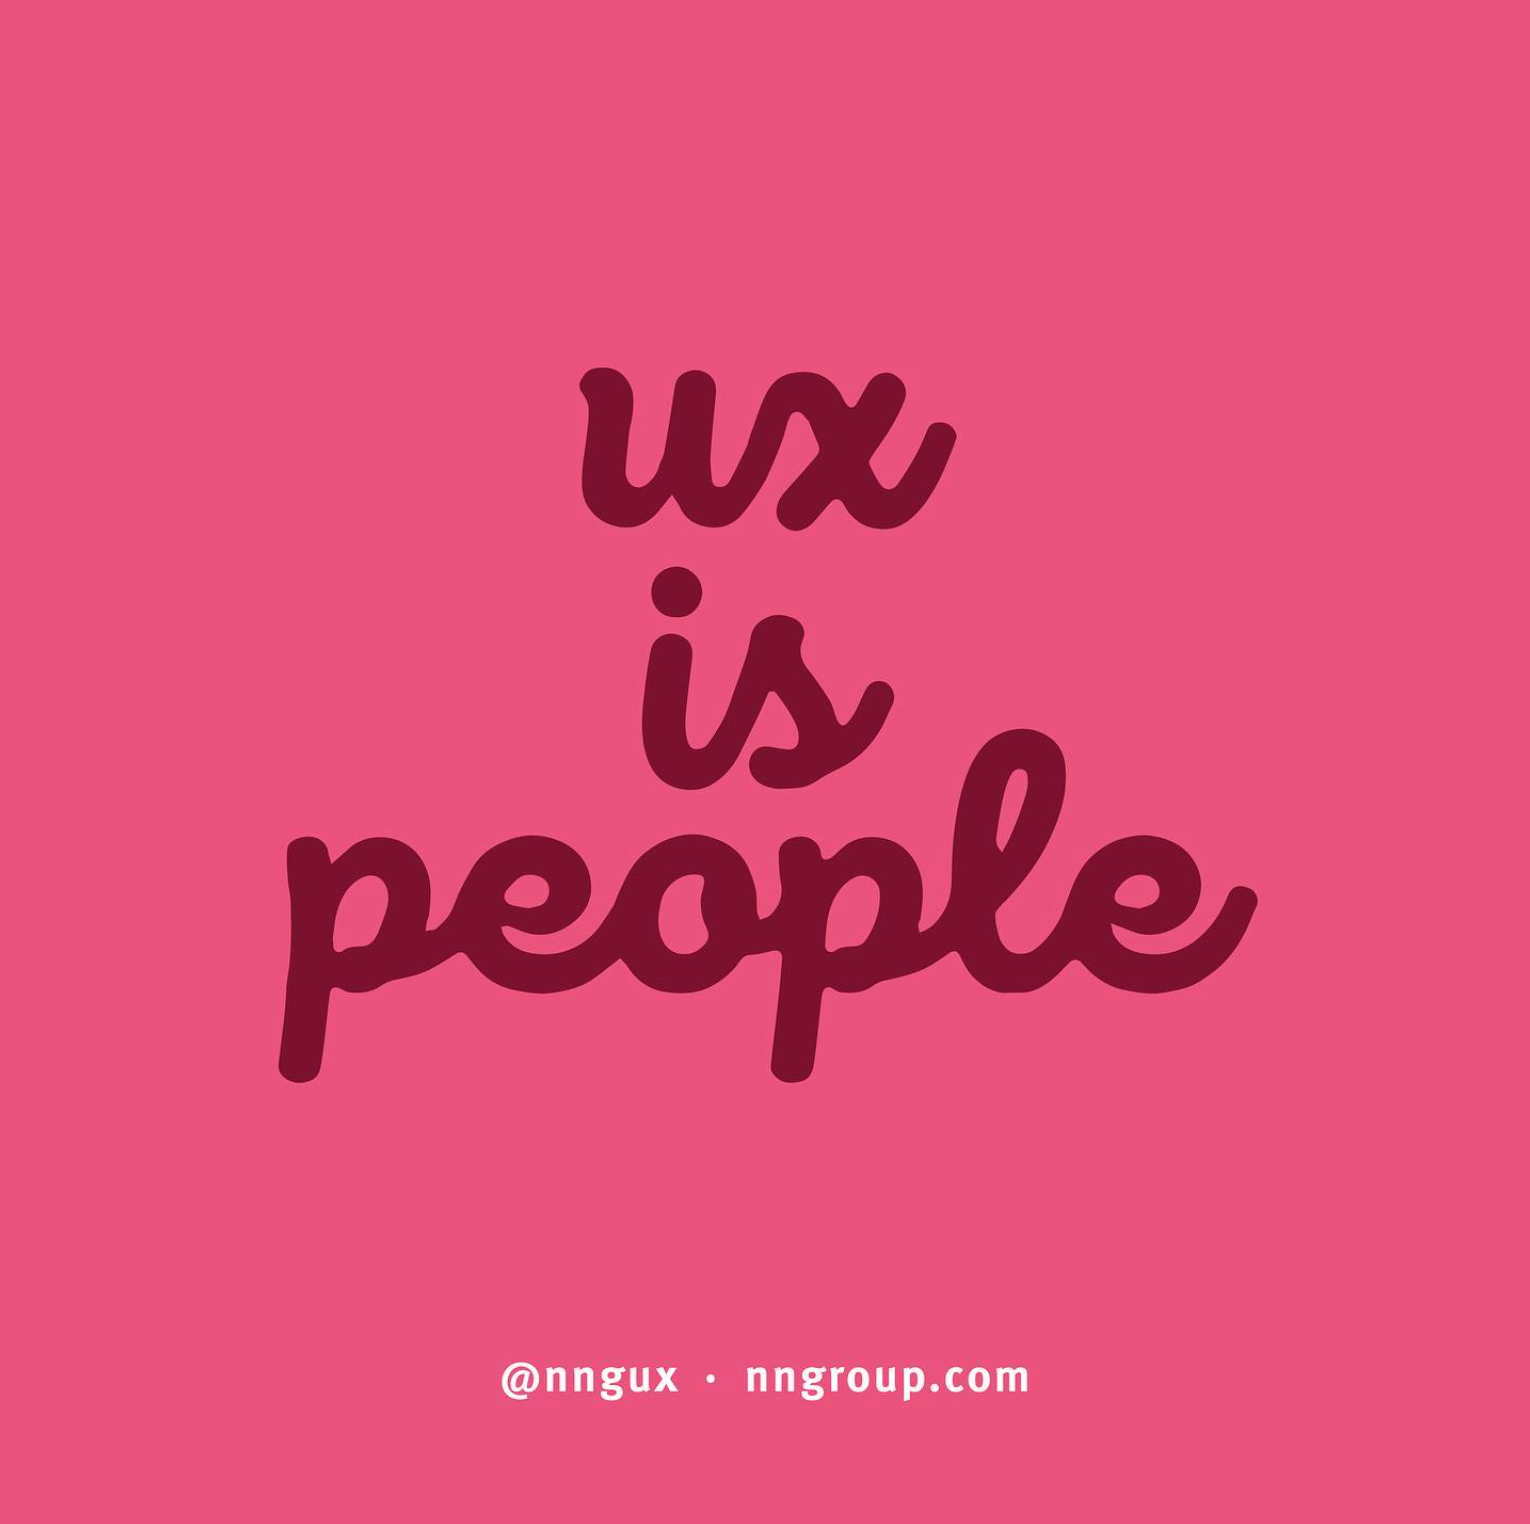 UX is People